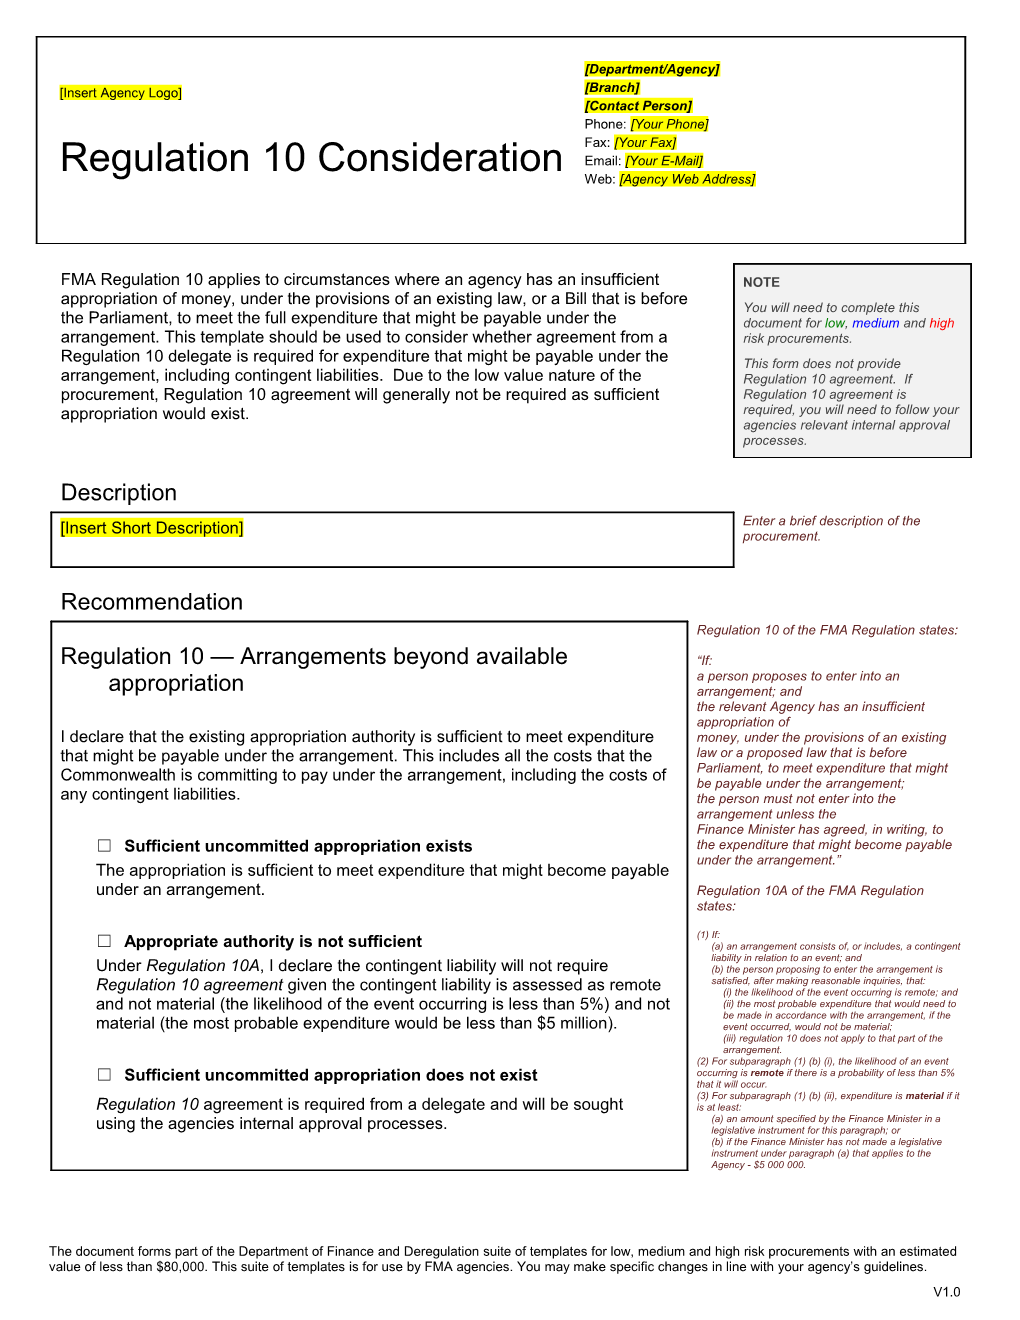 Regulation 10 Arrangements Beyond Available Appropriation